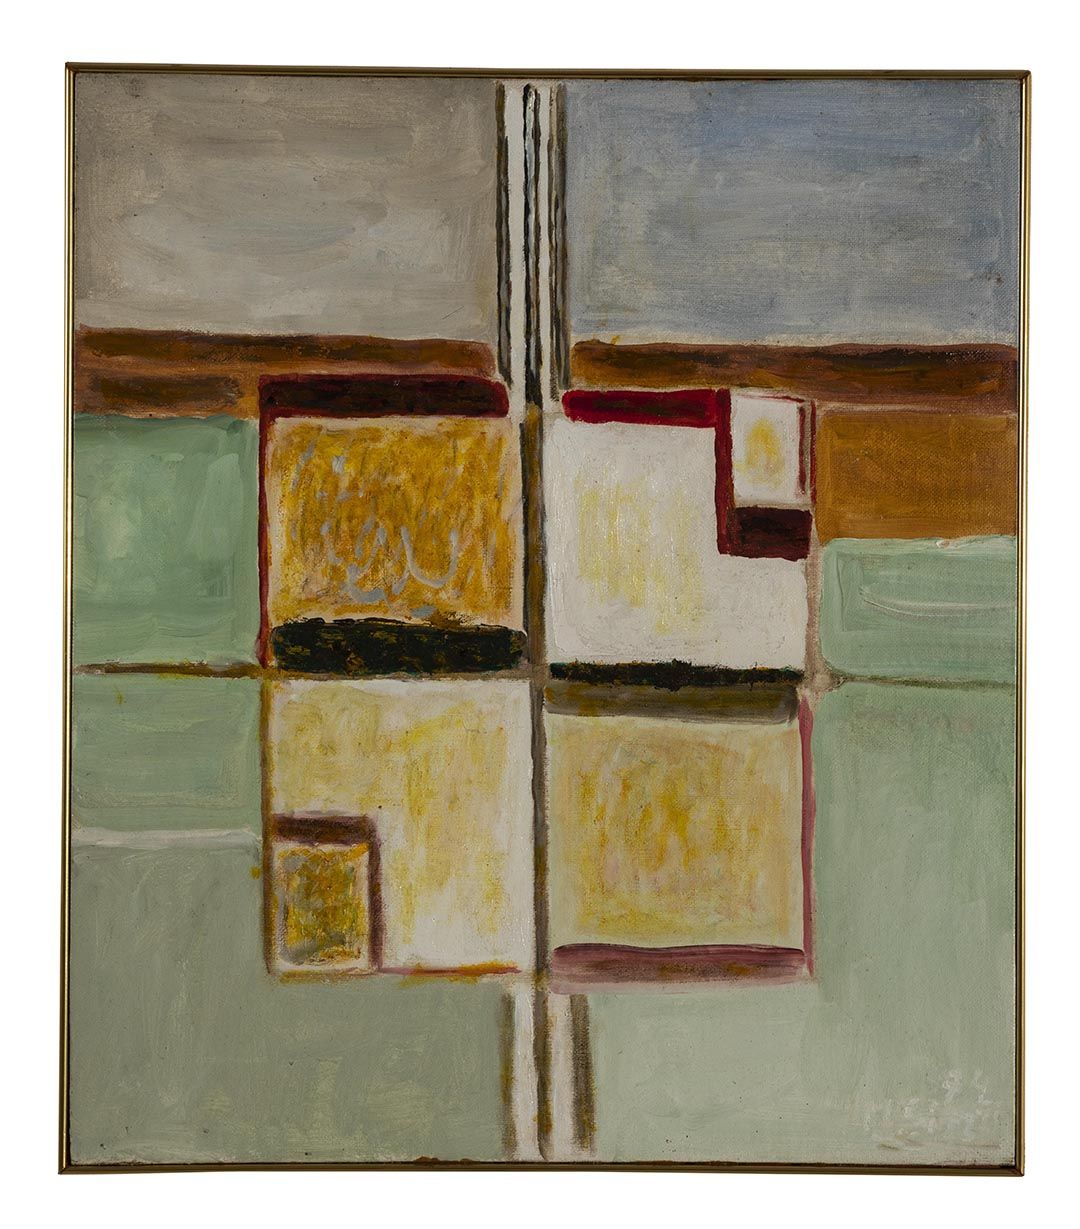 MARIO GHEZZI (Siena 1919 - Siena 2007) 渔民之岛

1974

纸板上的油彩

35x45厘米